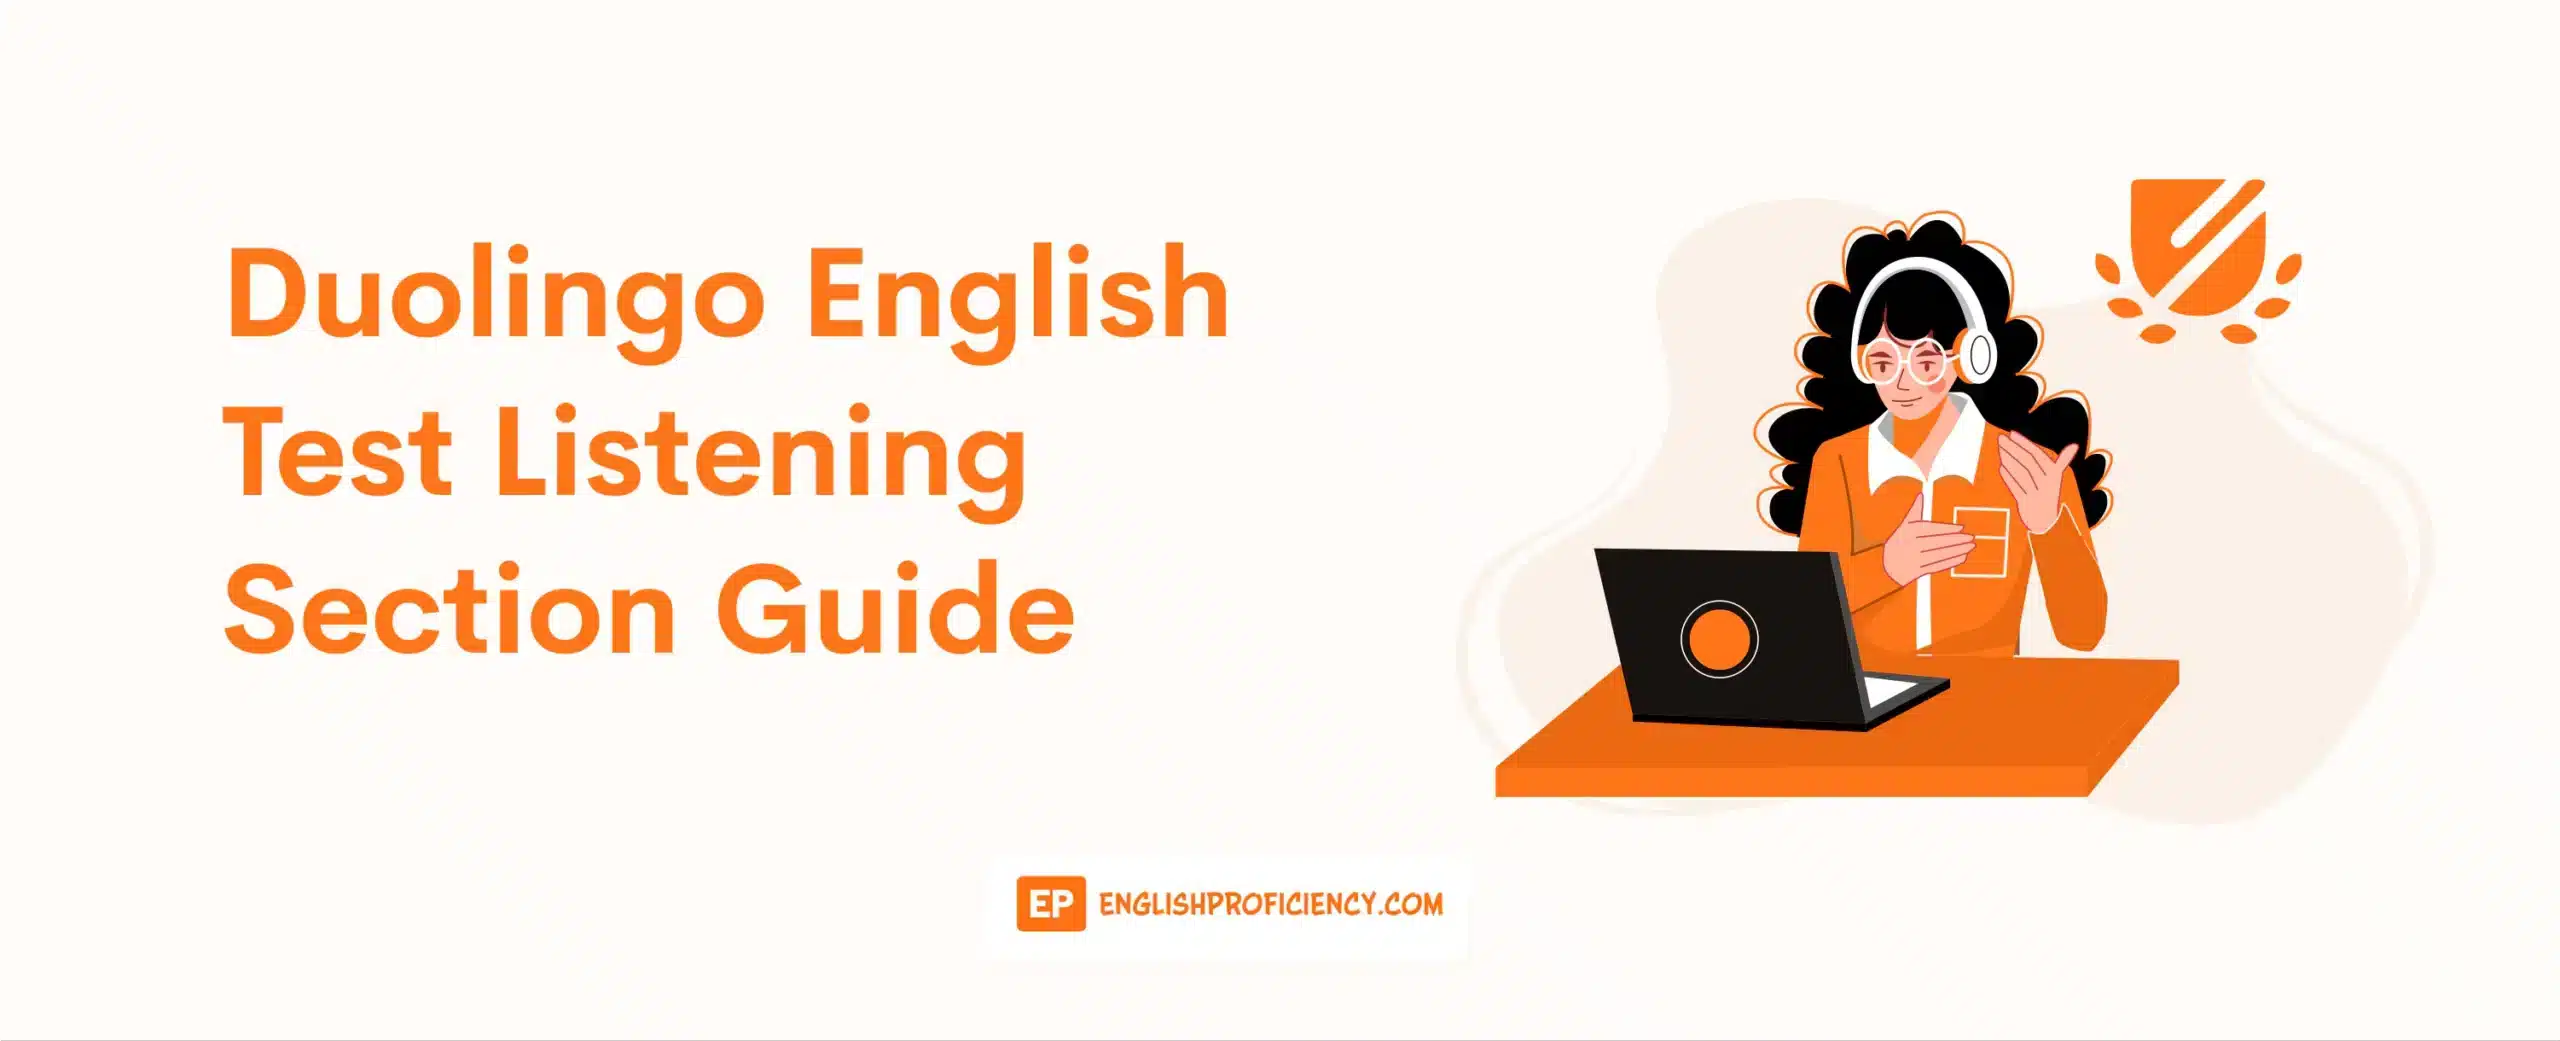 Duolingo English Test Listening Section Guide